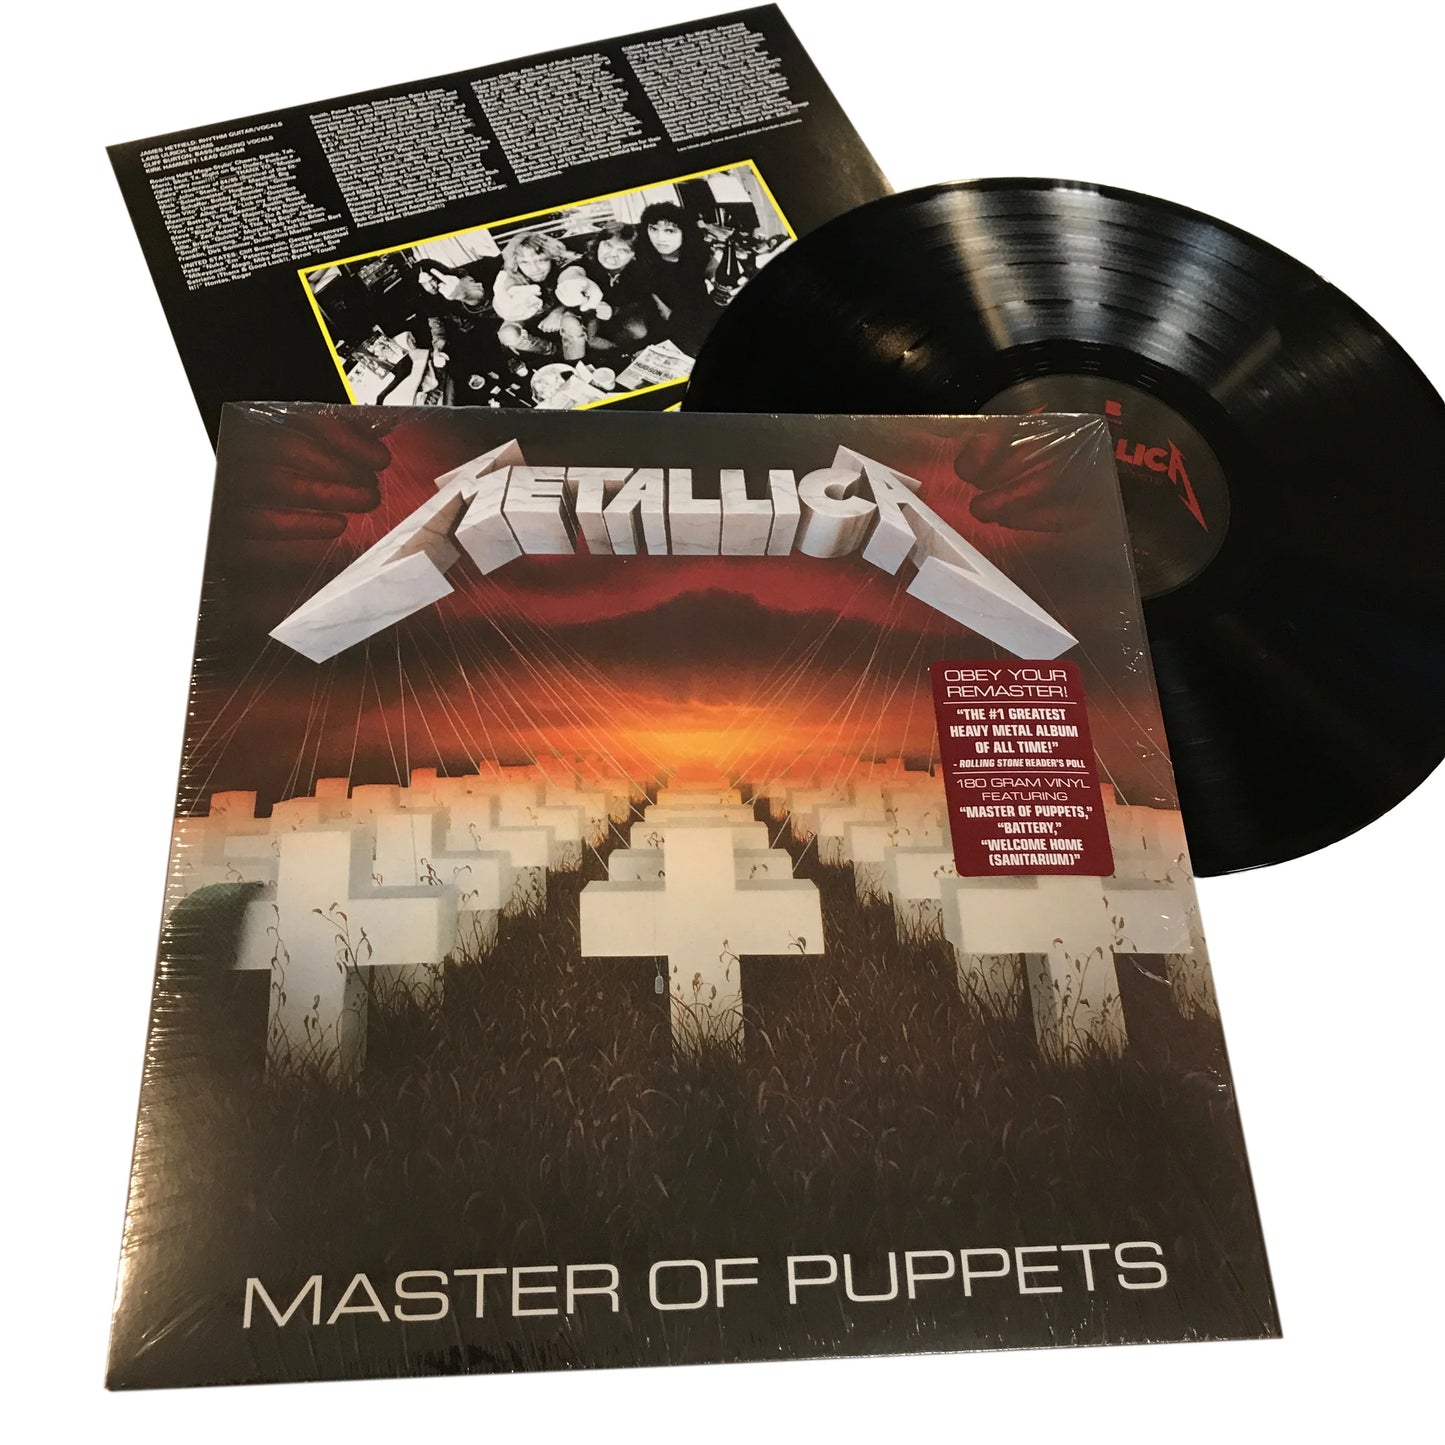 Metallica - Master of Puppets "Remastered" (180g on Black Vinyl)